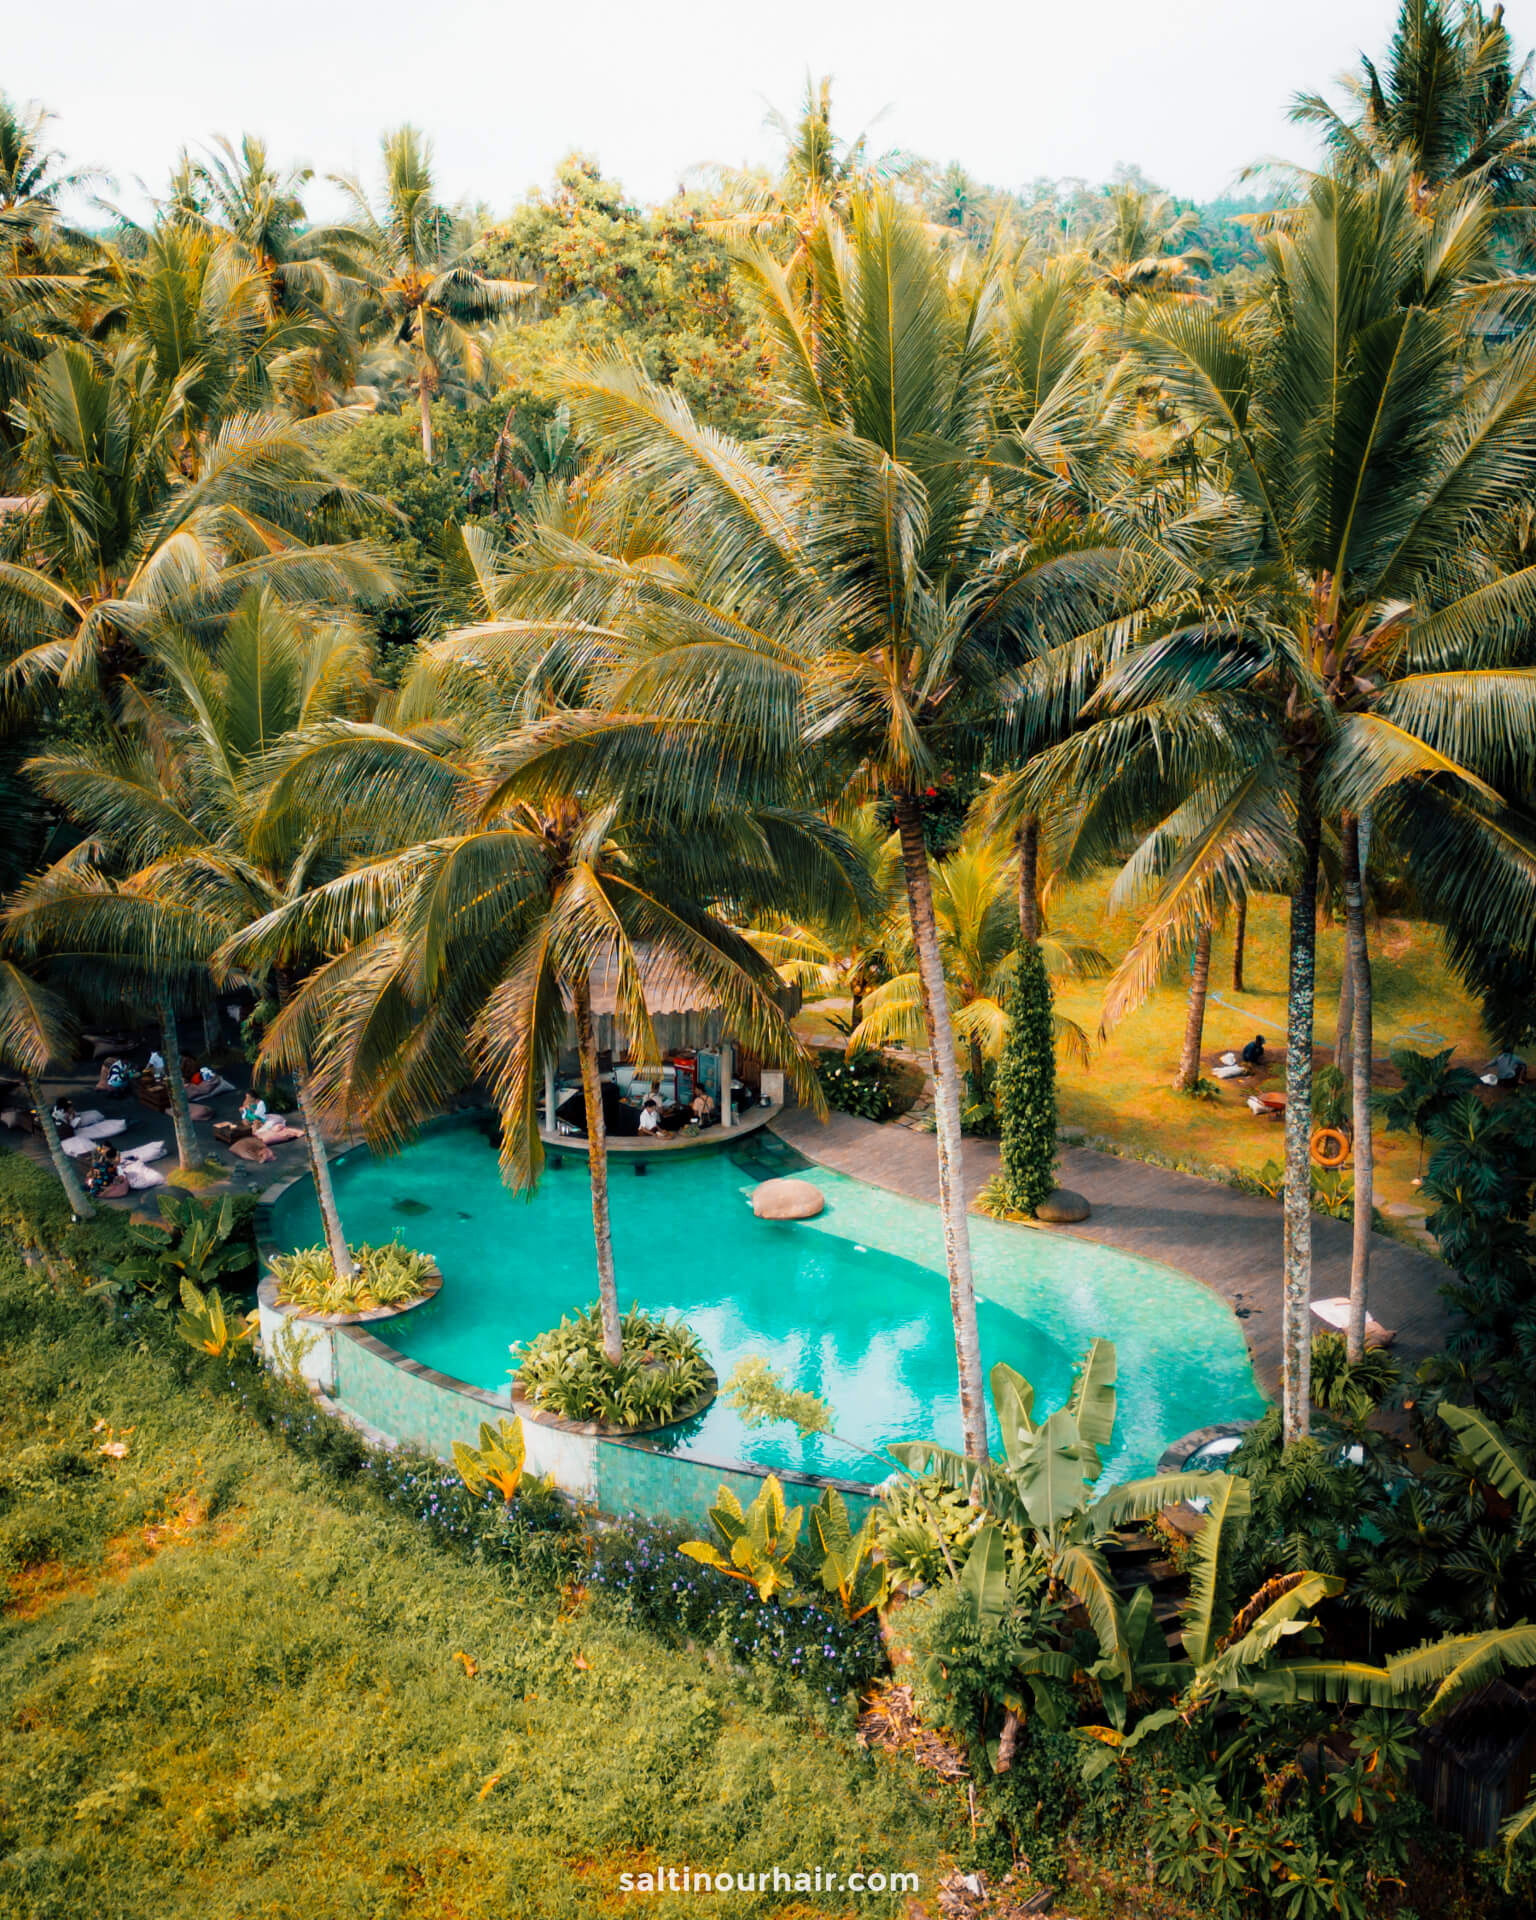 Bali honeymoon ubud pool bar